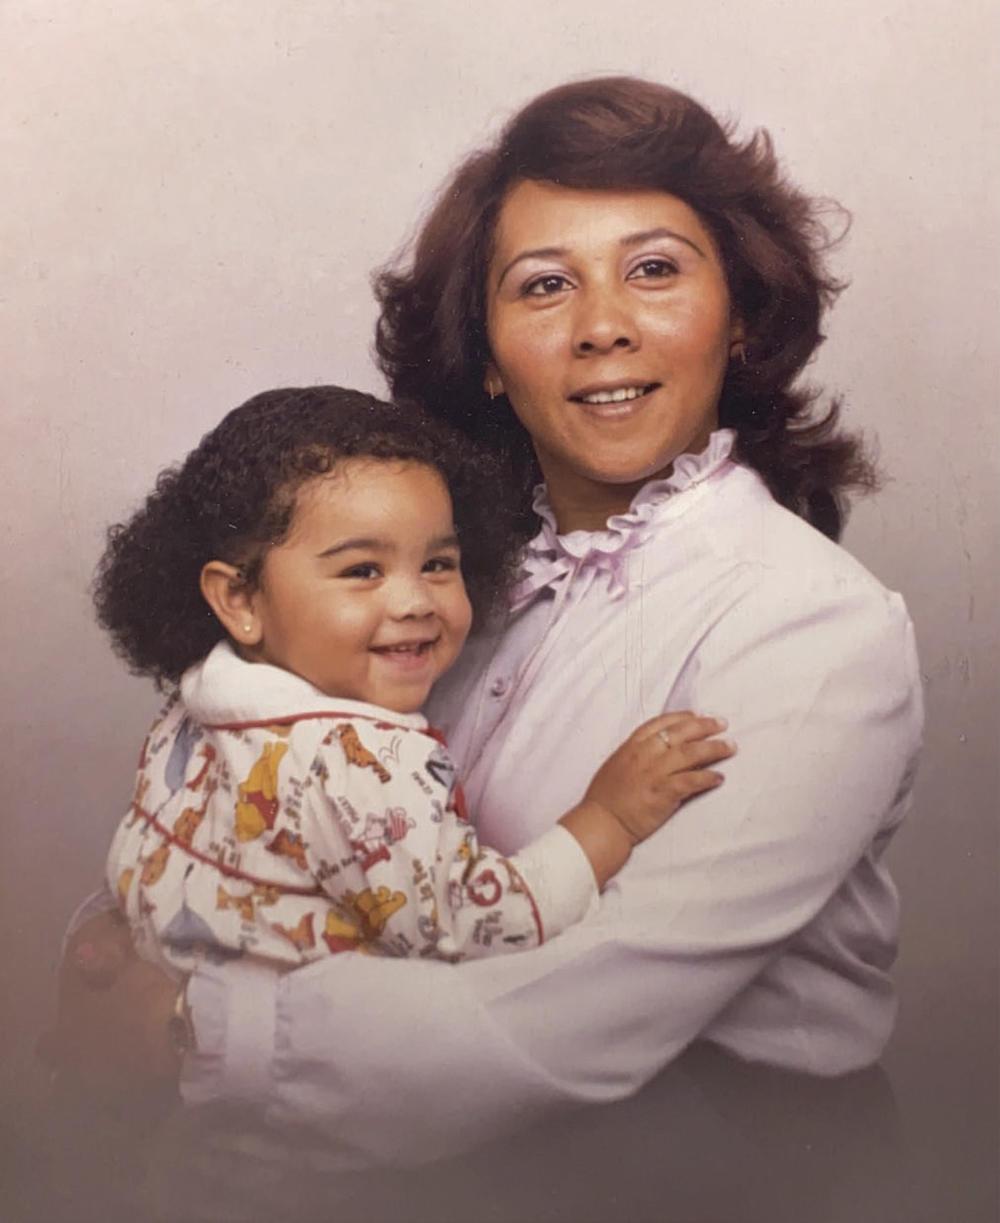 Illyanna Maisonet as a child with her mother, Carmen Nereida Maisonet.